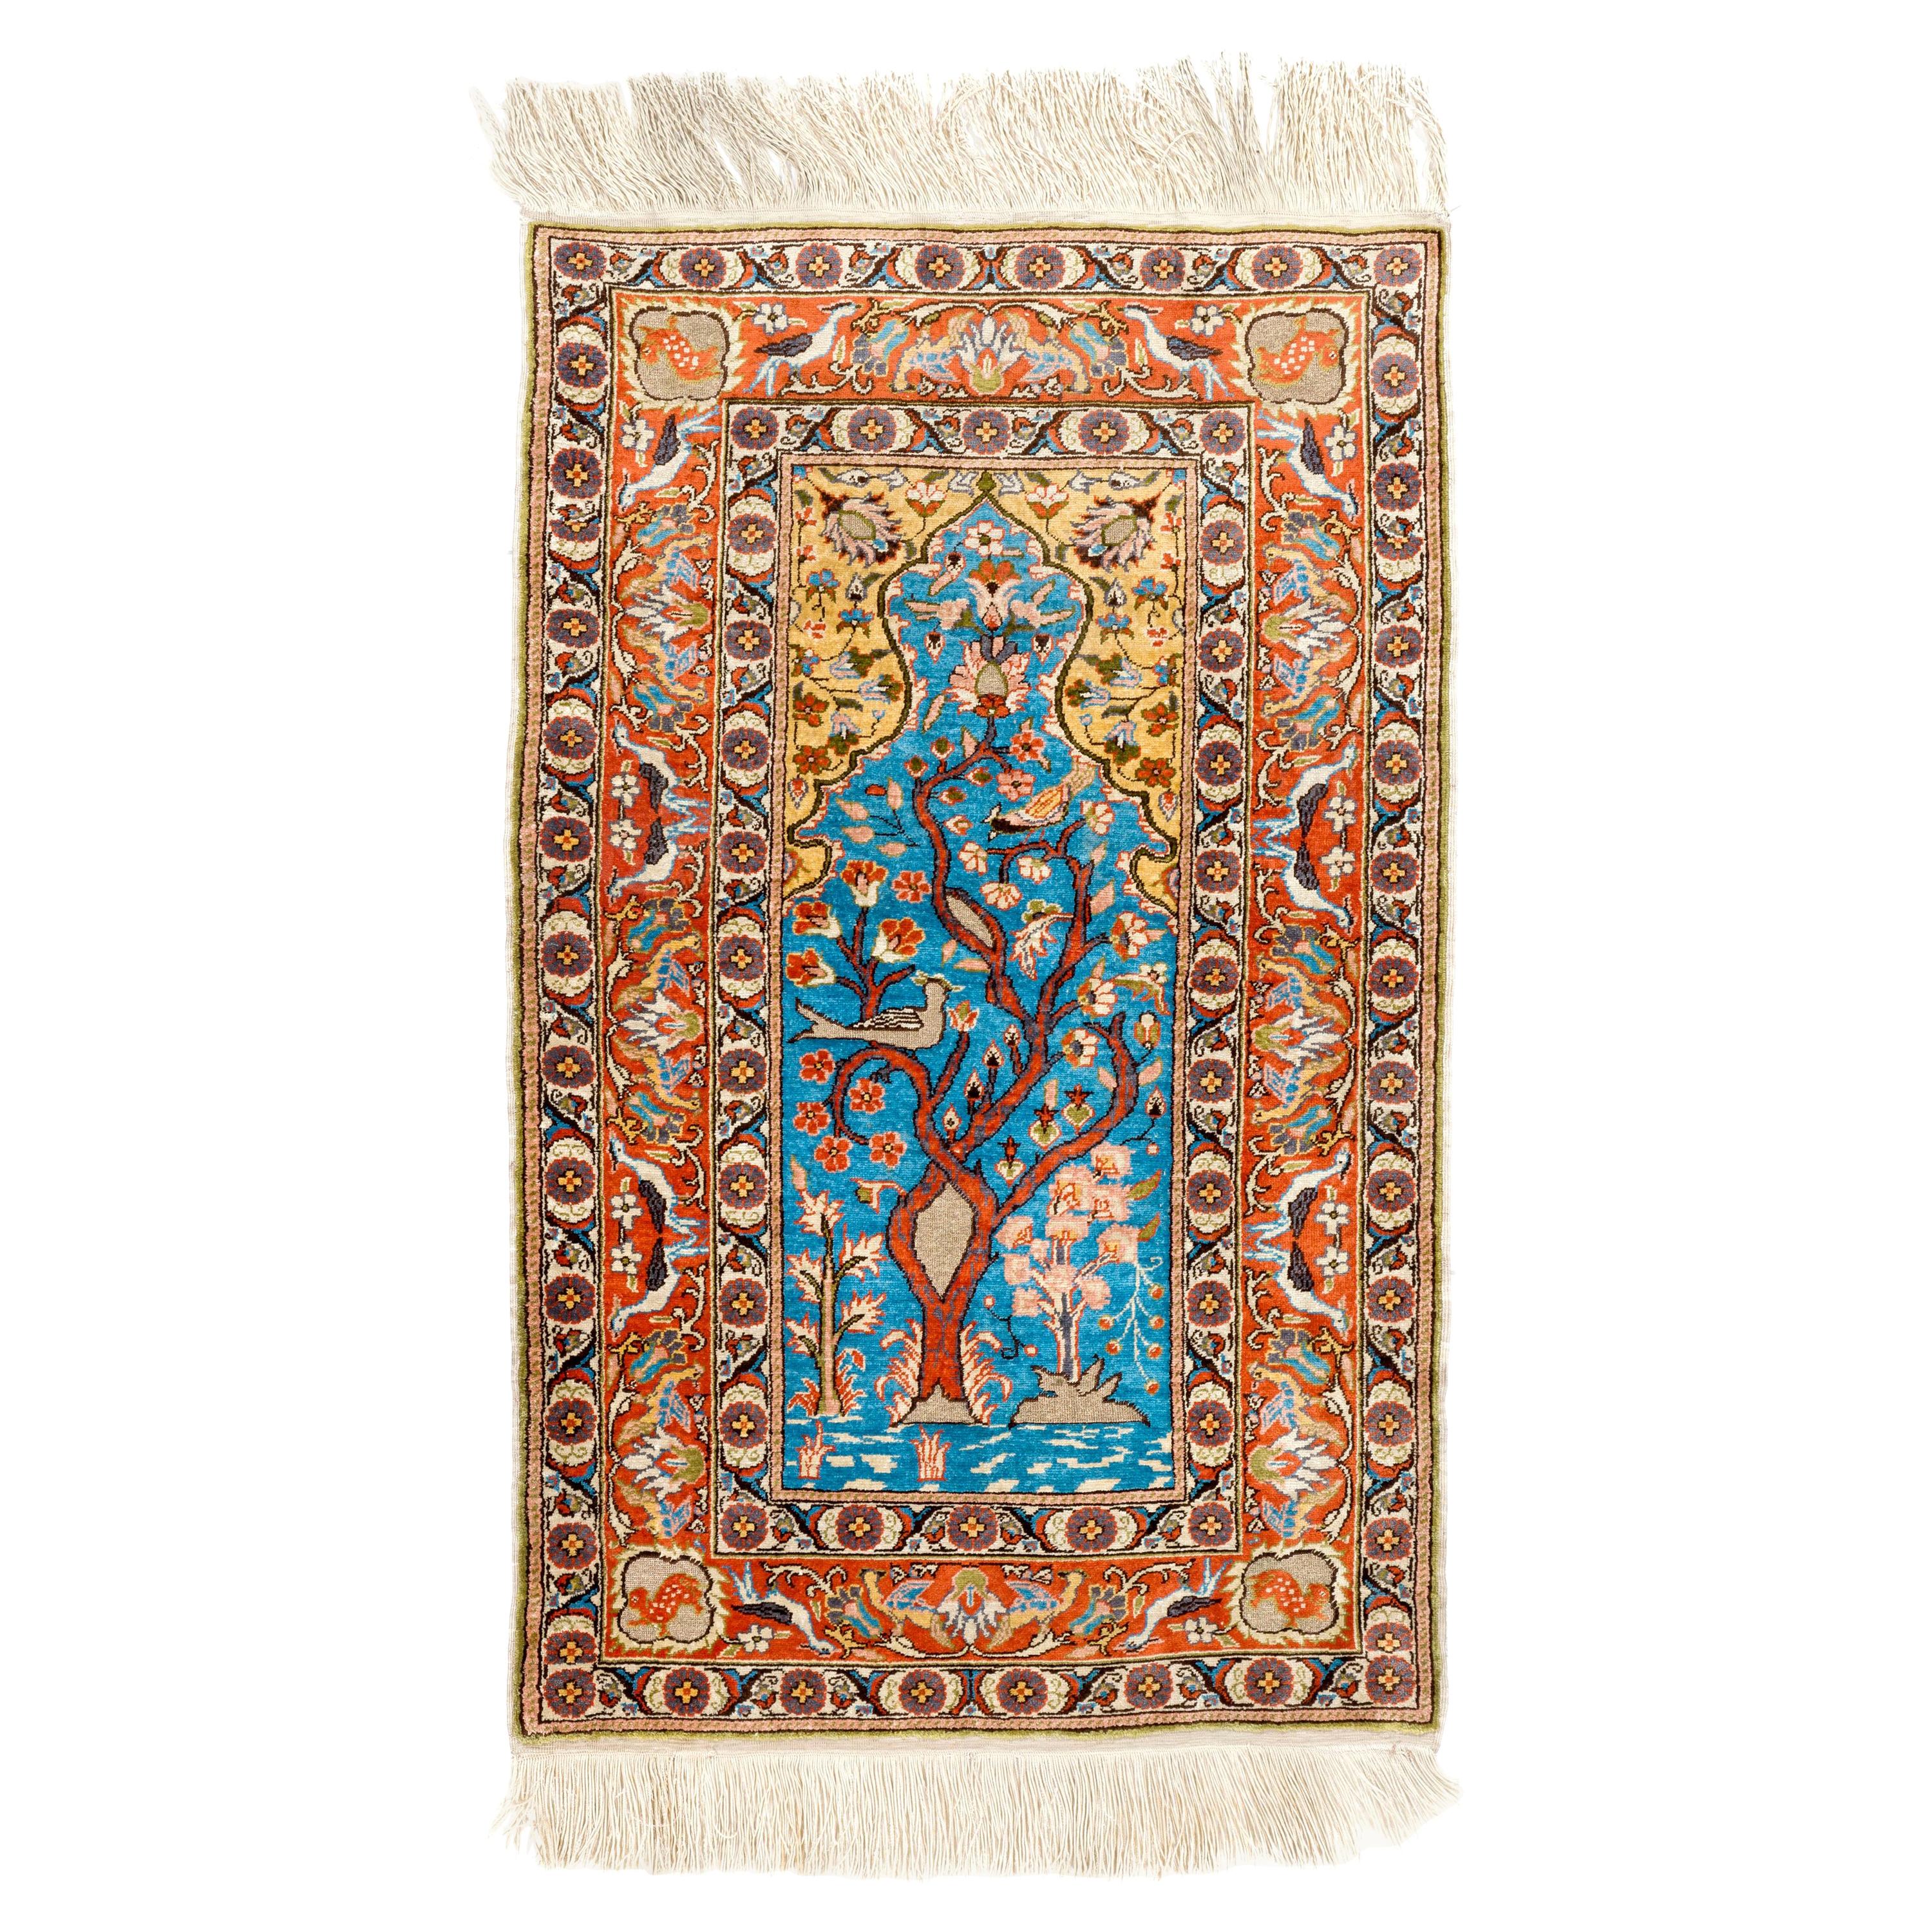 27x44 in Fine Silk & Metal Thread Pictorial Rug, Splendid Turkish Wall Hanging For Sale